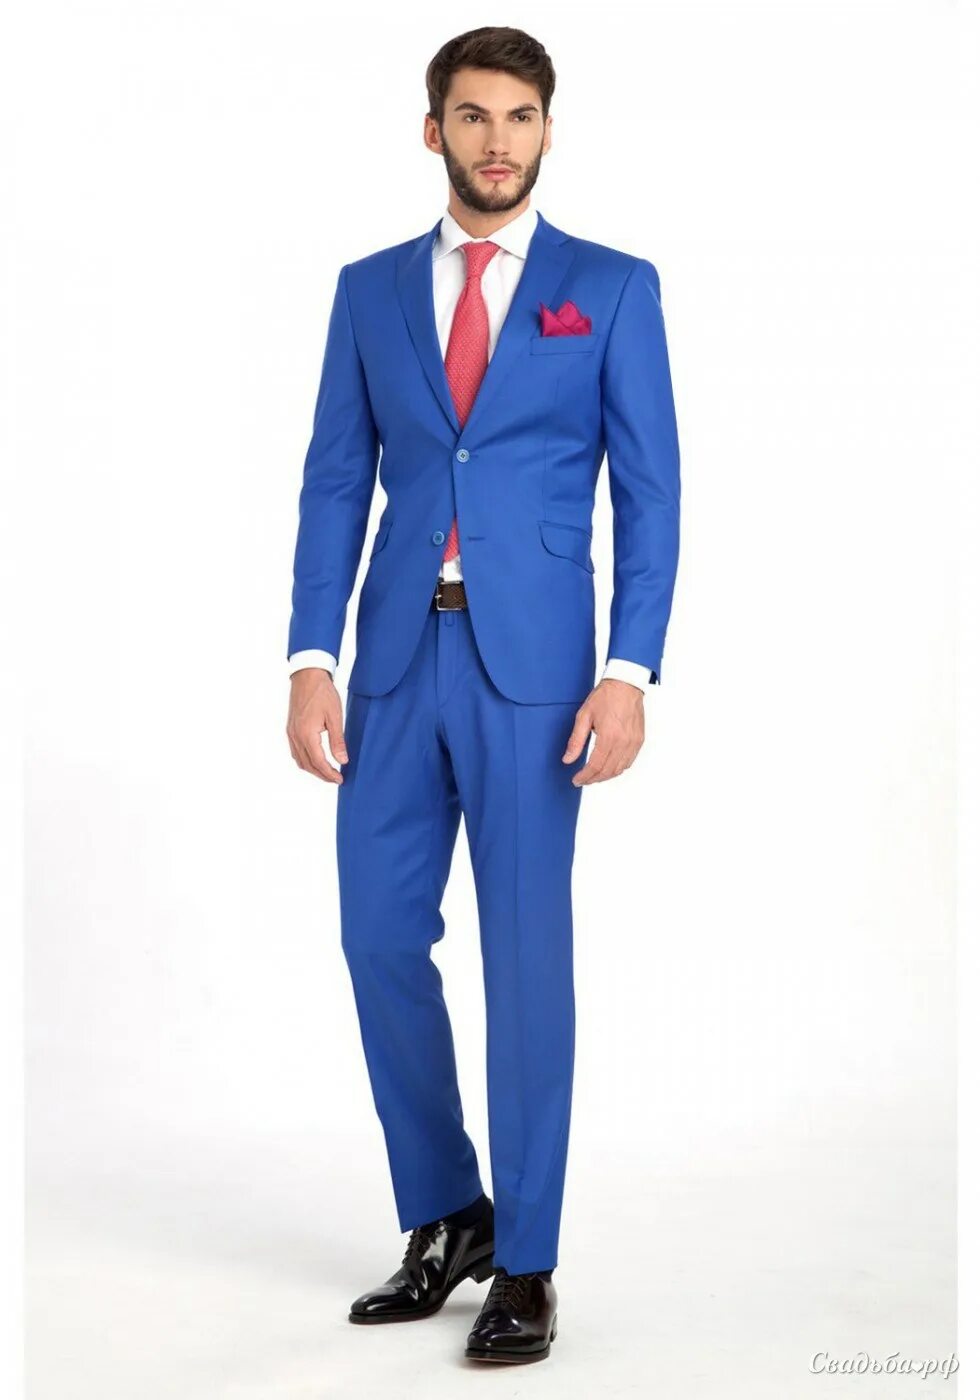 Костюм мужской, синий. Синий костюм мужской с красным галстуком. Ярко синий костюм мужской. Синий костюм мужской с галстуком.